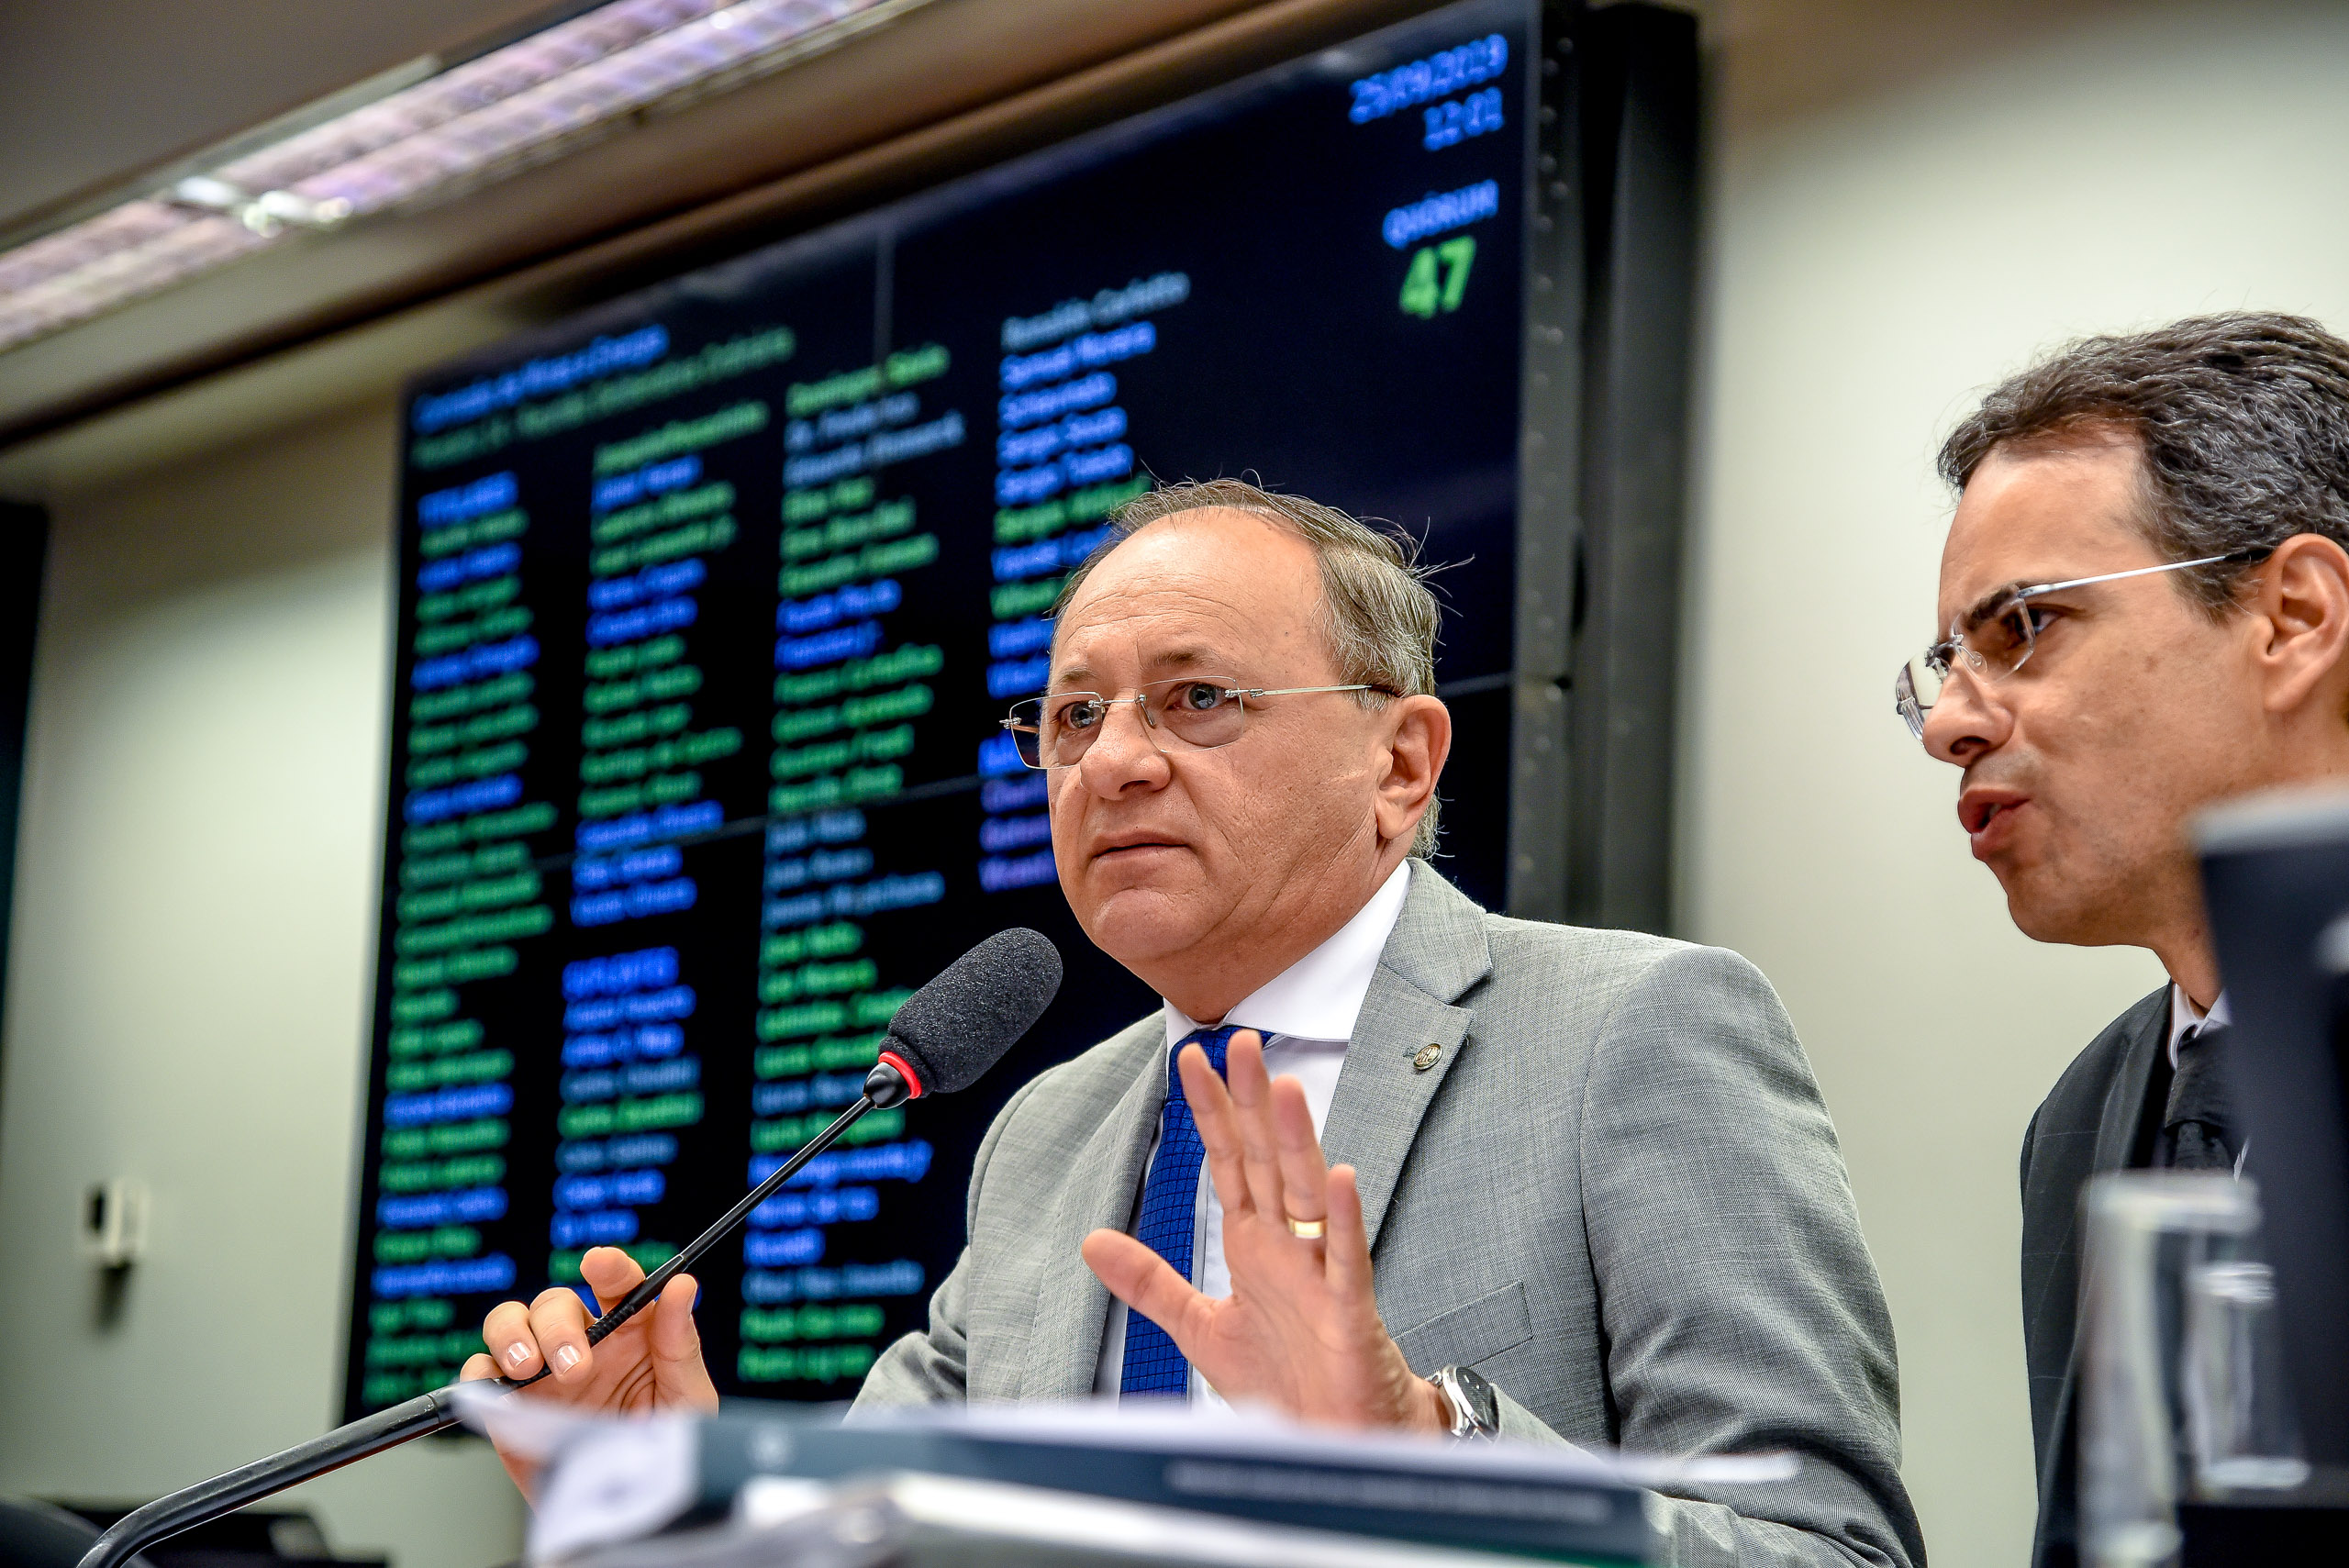 Protestos contra Bolsonaro são “lero-lero, blá-blá-blá e zoada”, ironiza deputado federal do RN